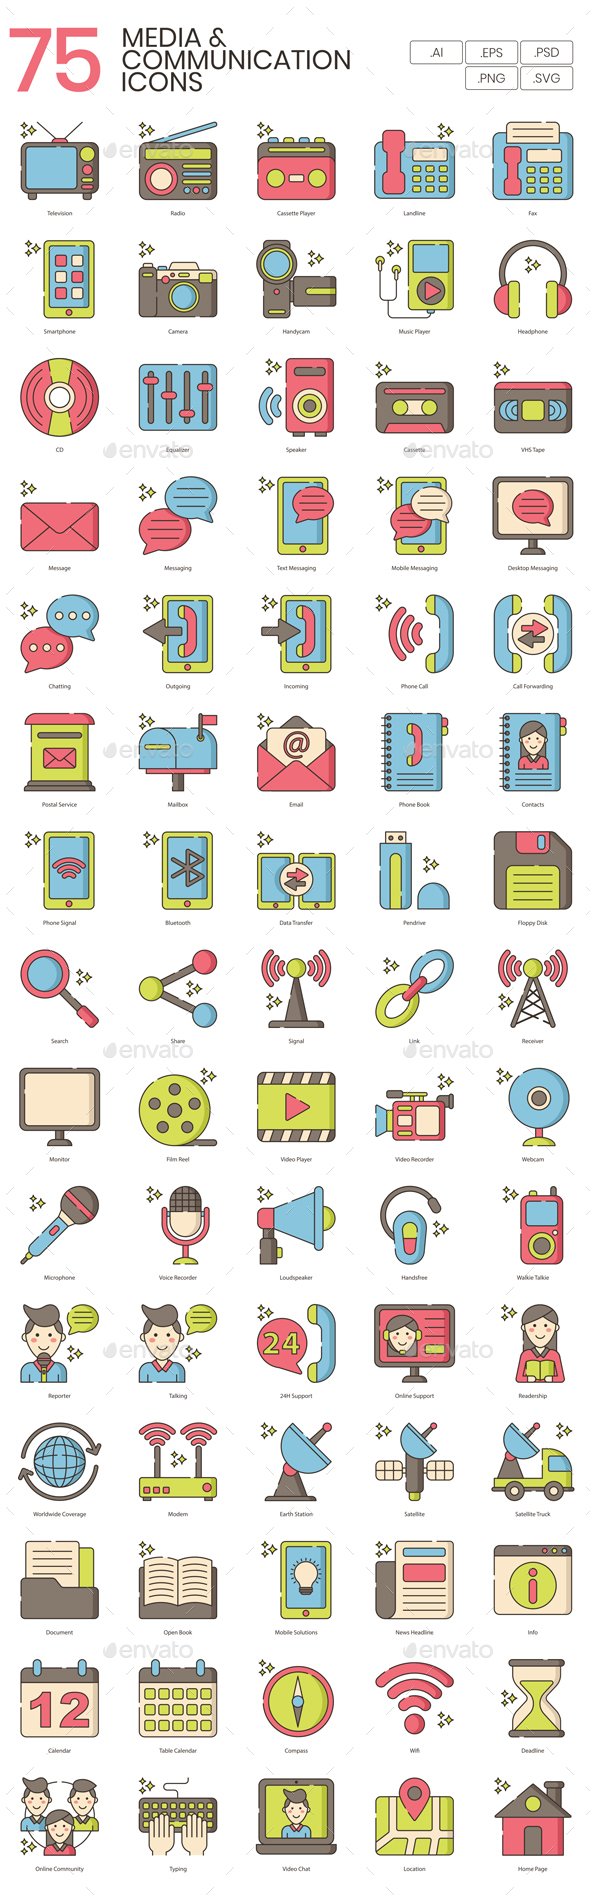 75 Communication & Media Icons - Hazel Series